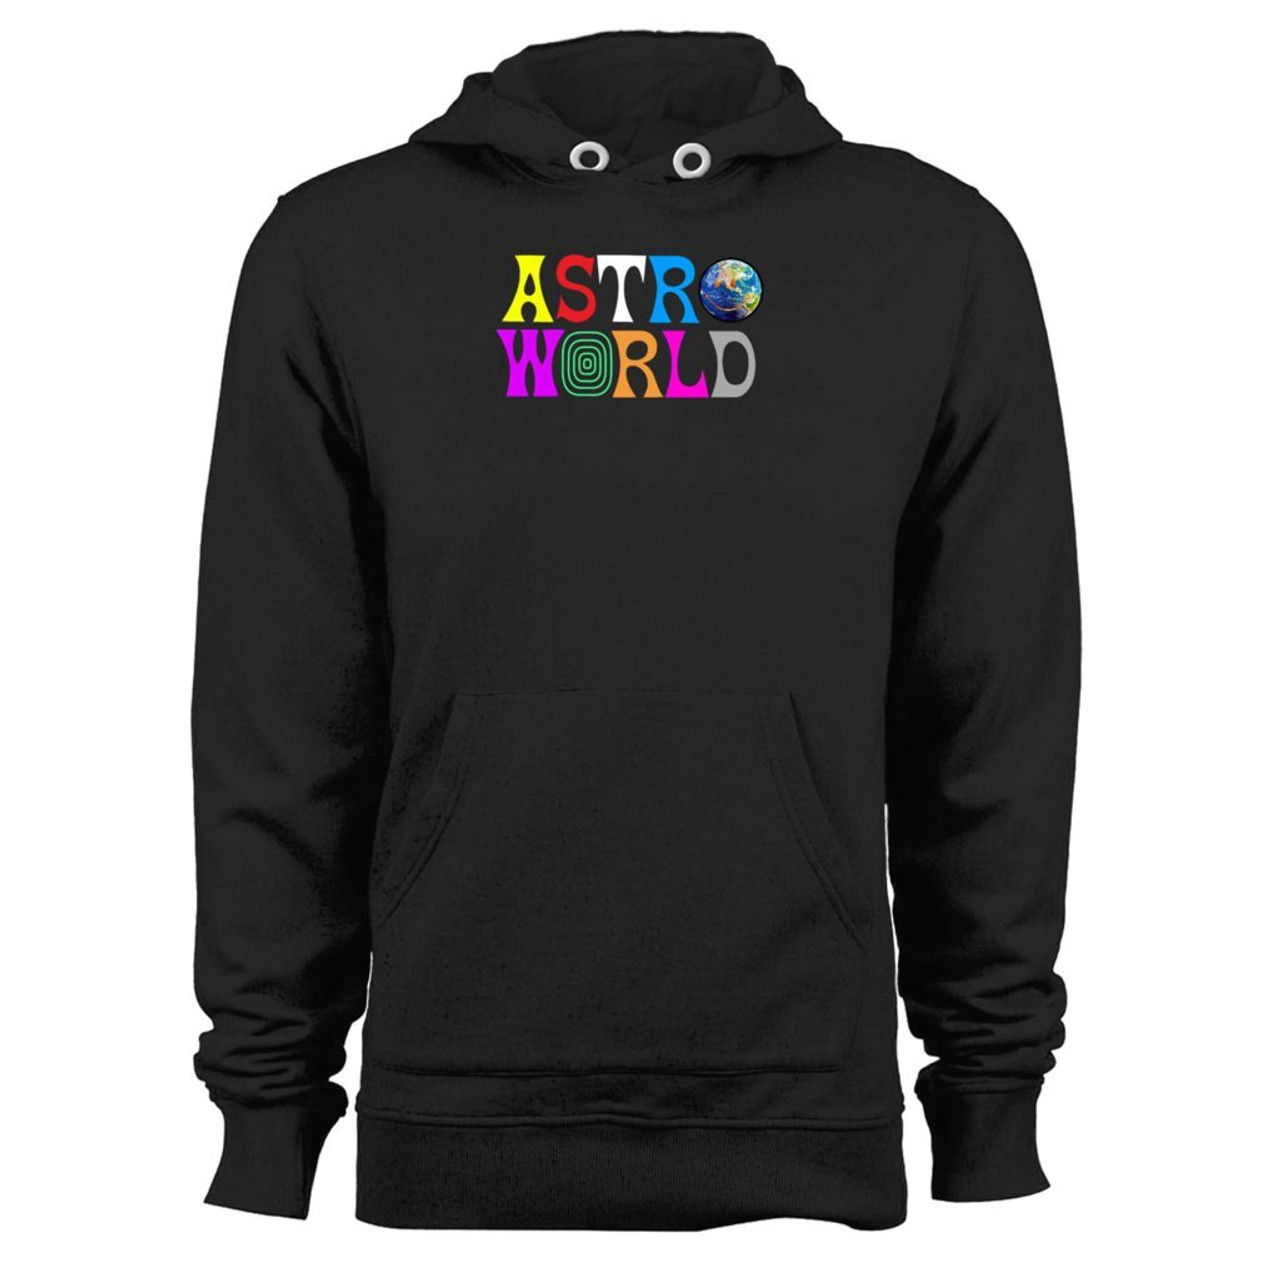 Astroworld Look Mum I Can Fly Tshirt Buy Travis Scott Tee Shirts S-3XL